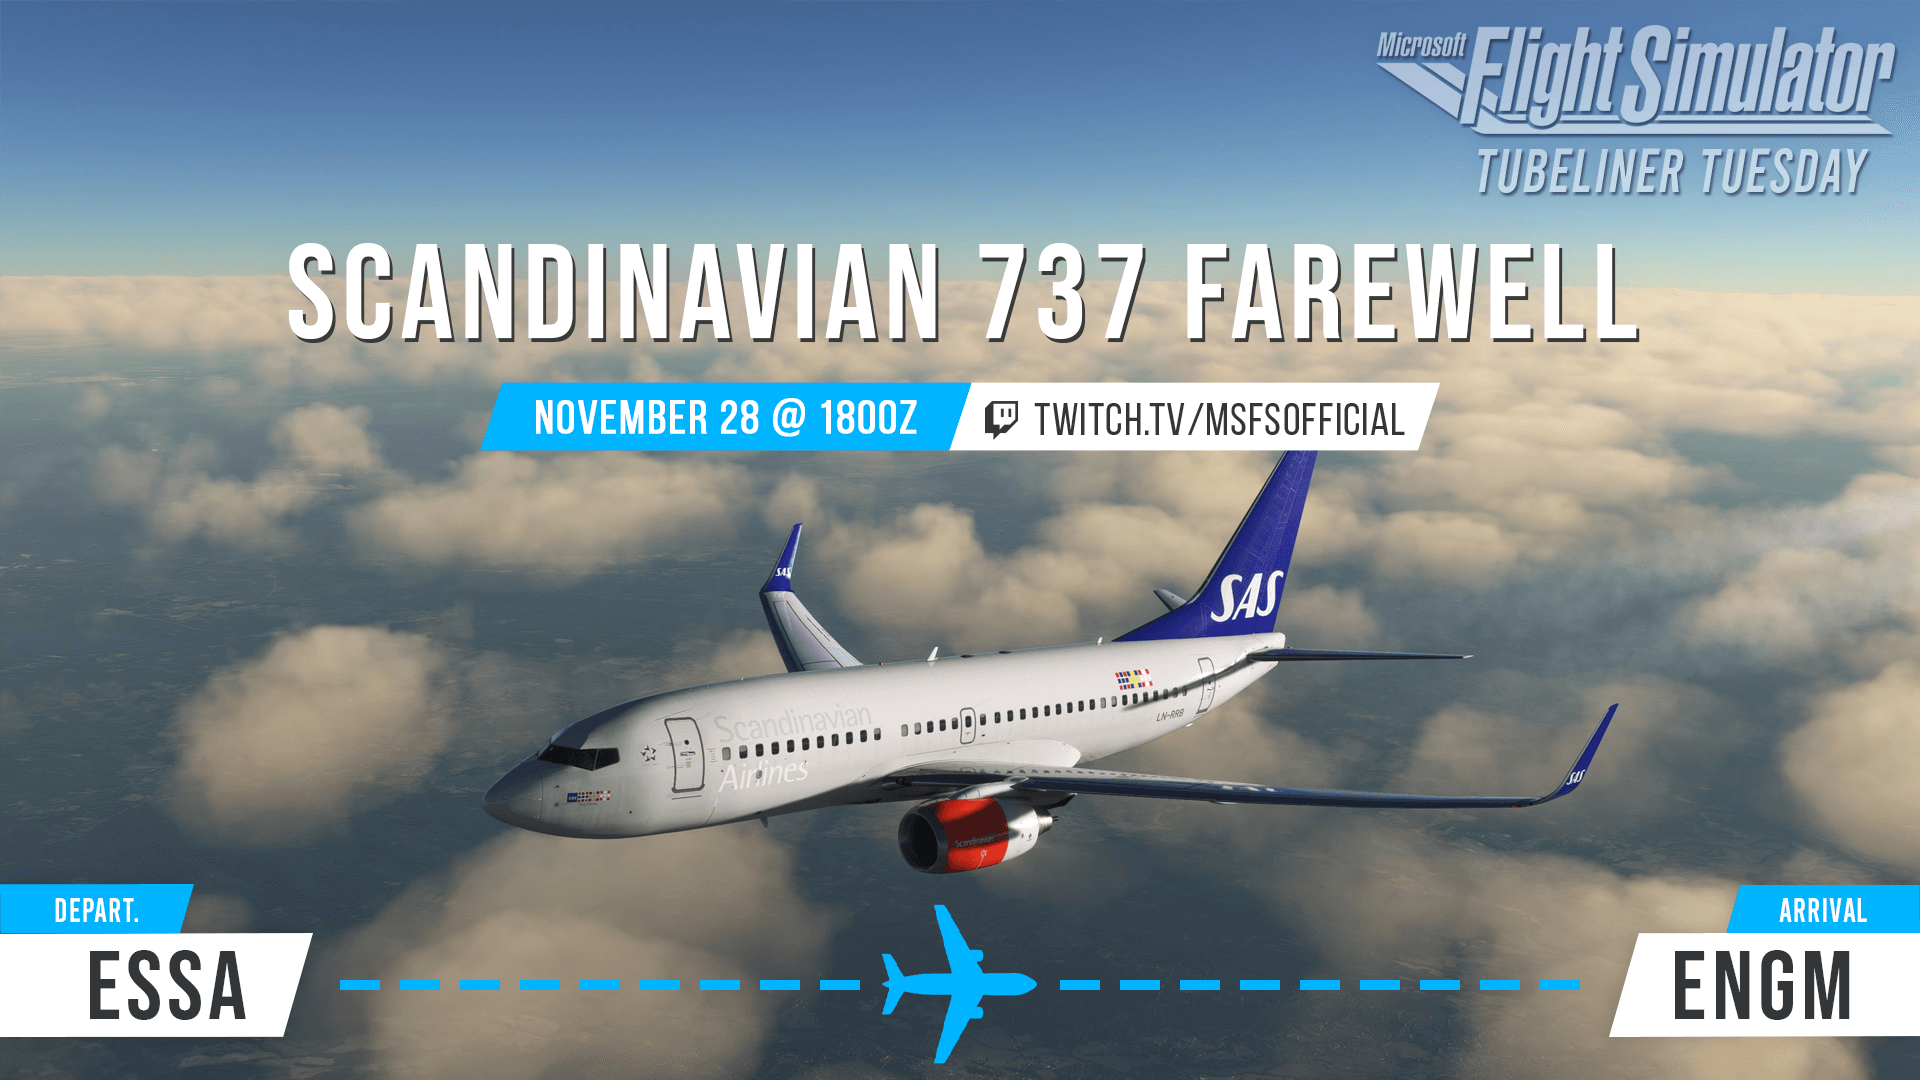 Tubeliner Tuesday: Scandinavian 737 Farewell - November 28 @ 1800Z. twitch.tv/msfsofficial